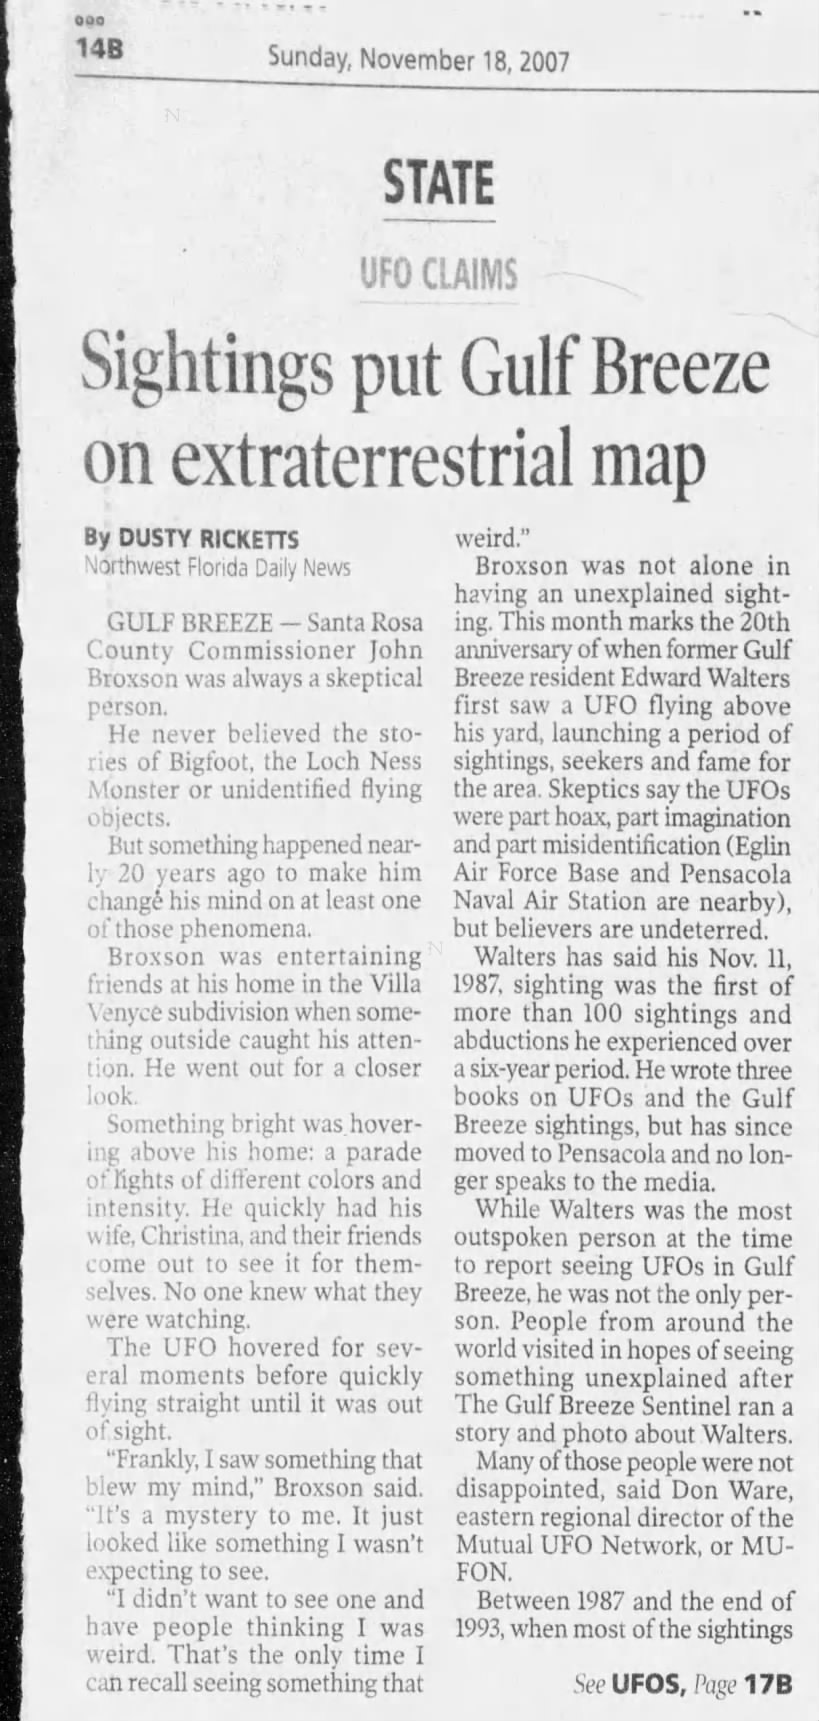 The Naples Daily News - November 18, 2007 - page 48 - Gulf Breeze UFO